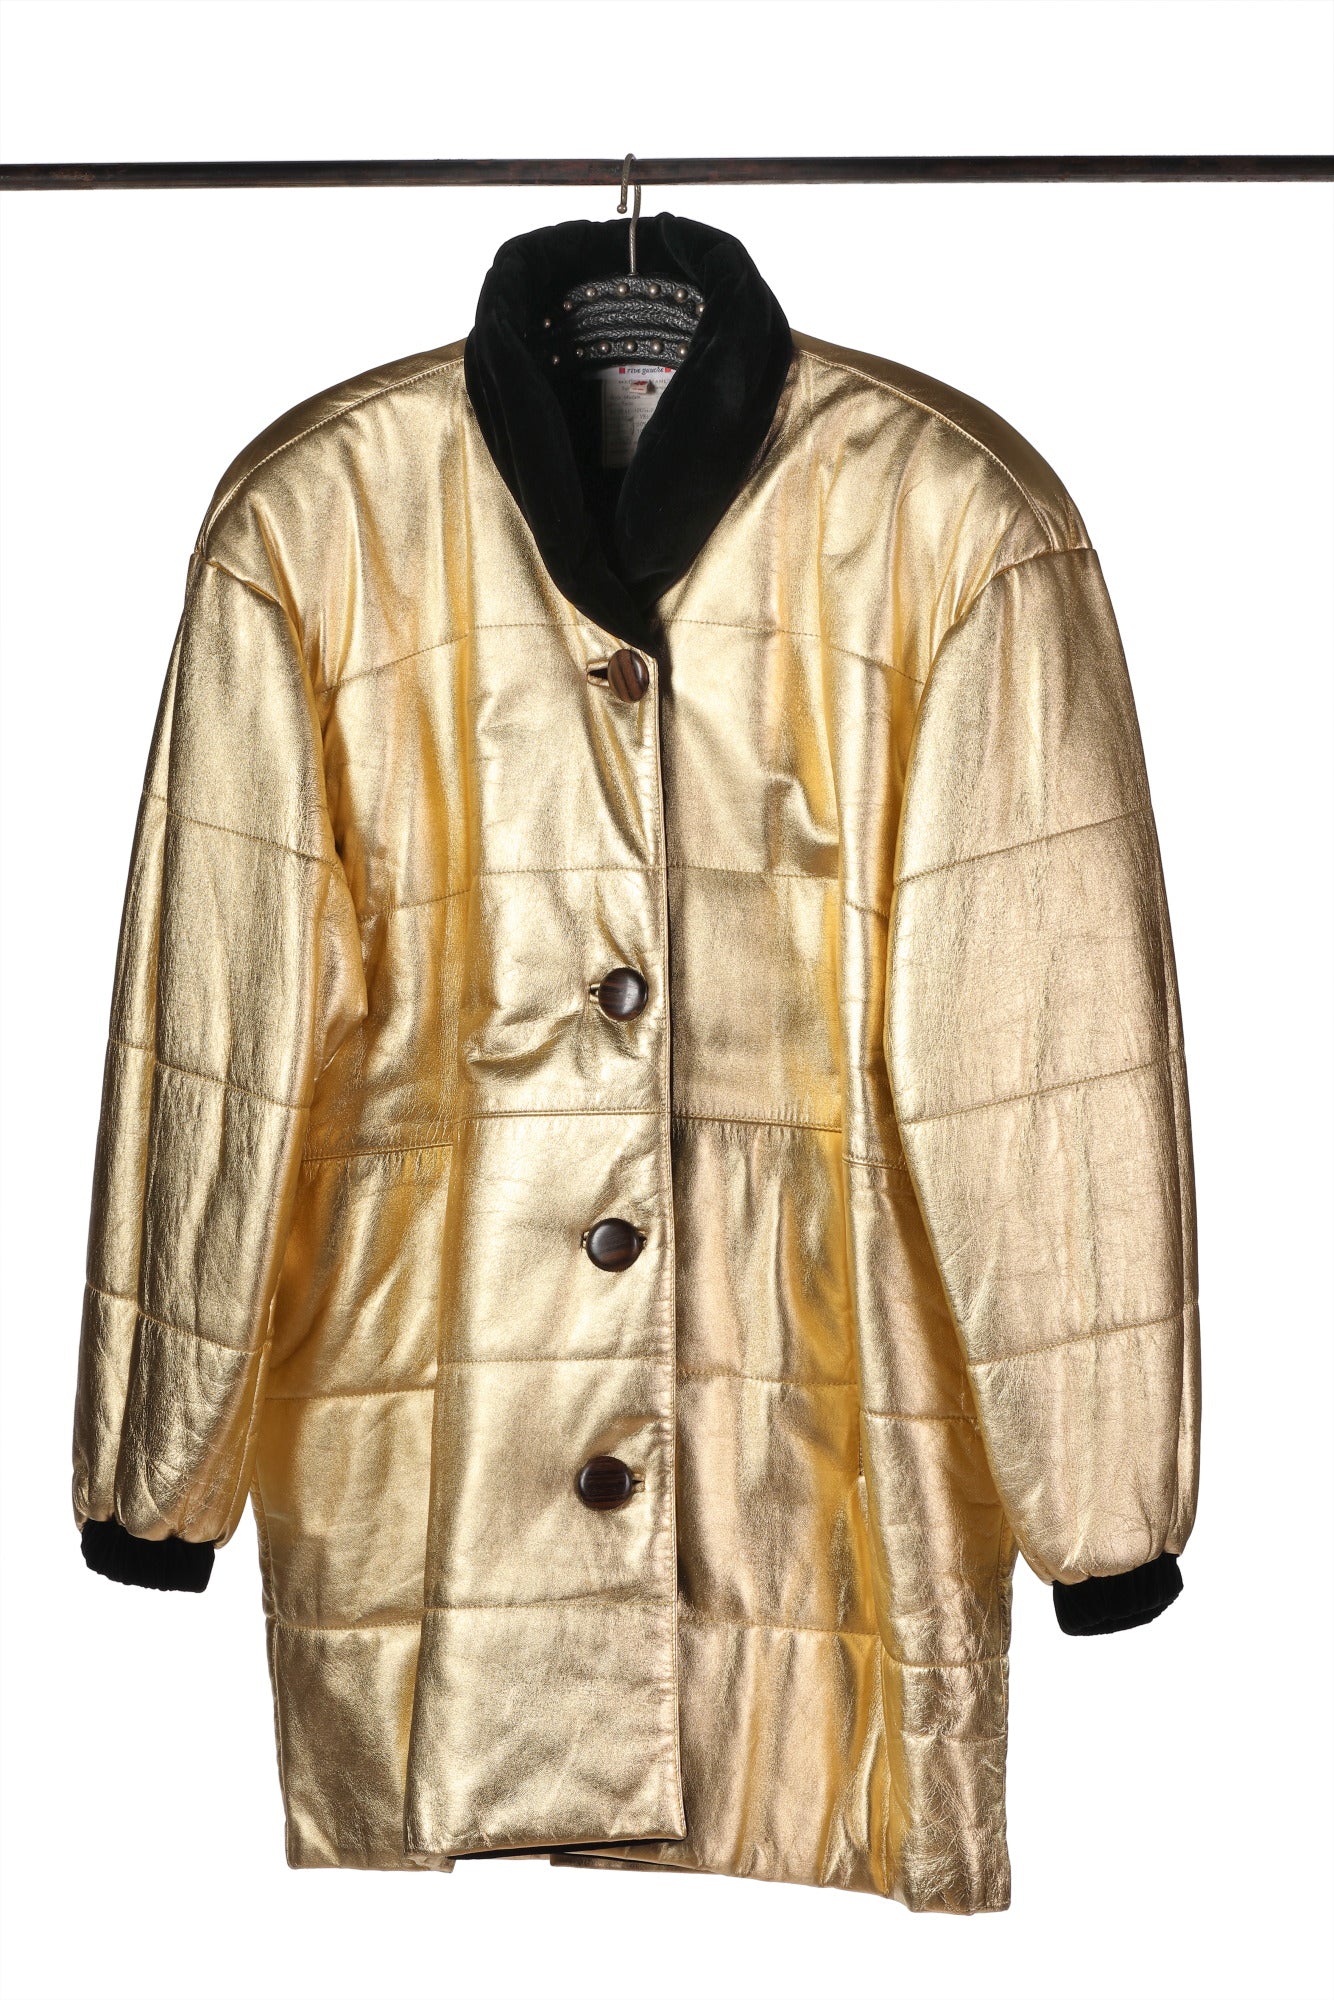 Yves Saint Laurent Rive Gauche gold leather jacket